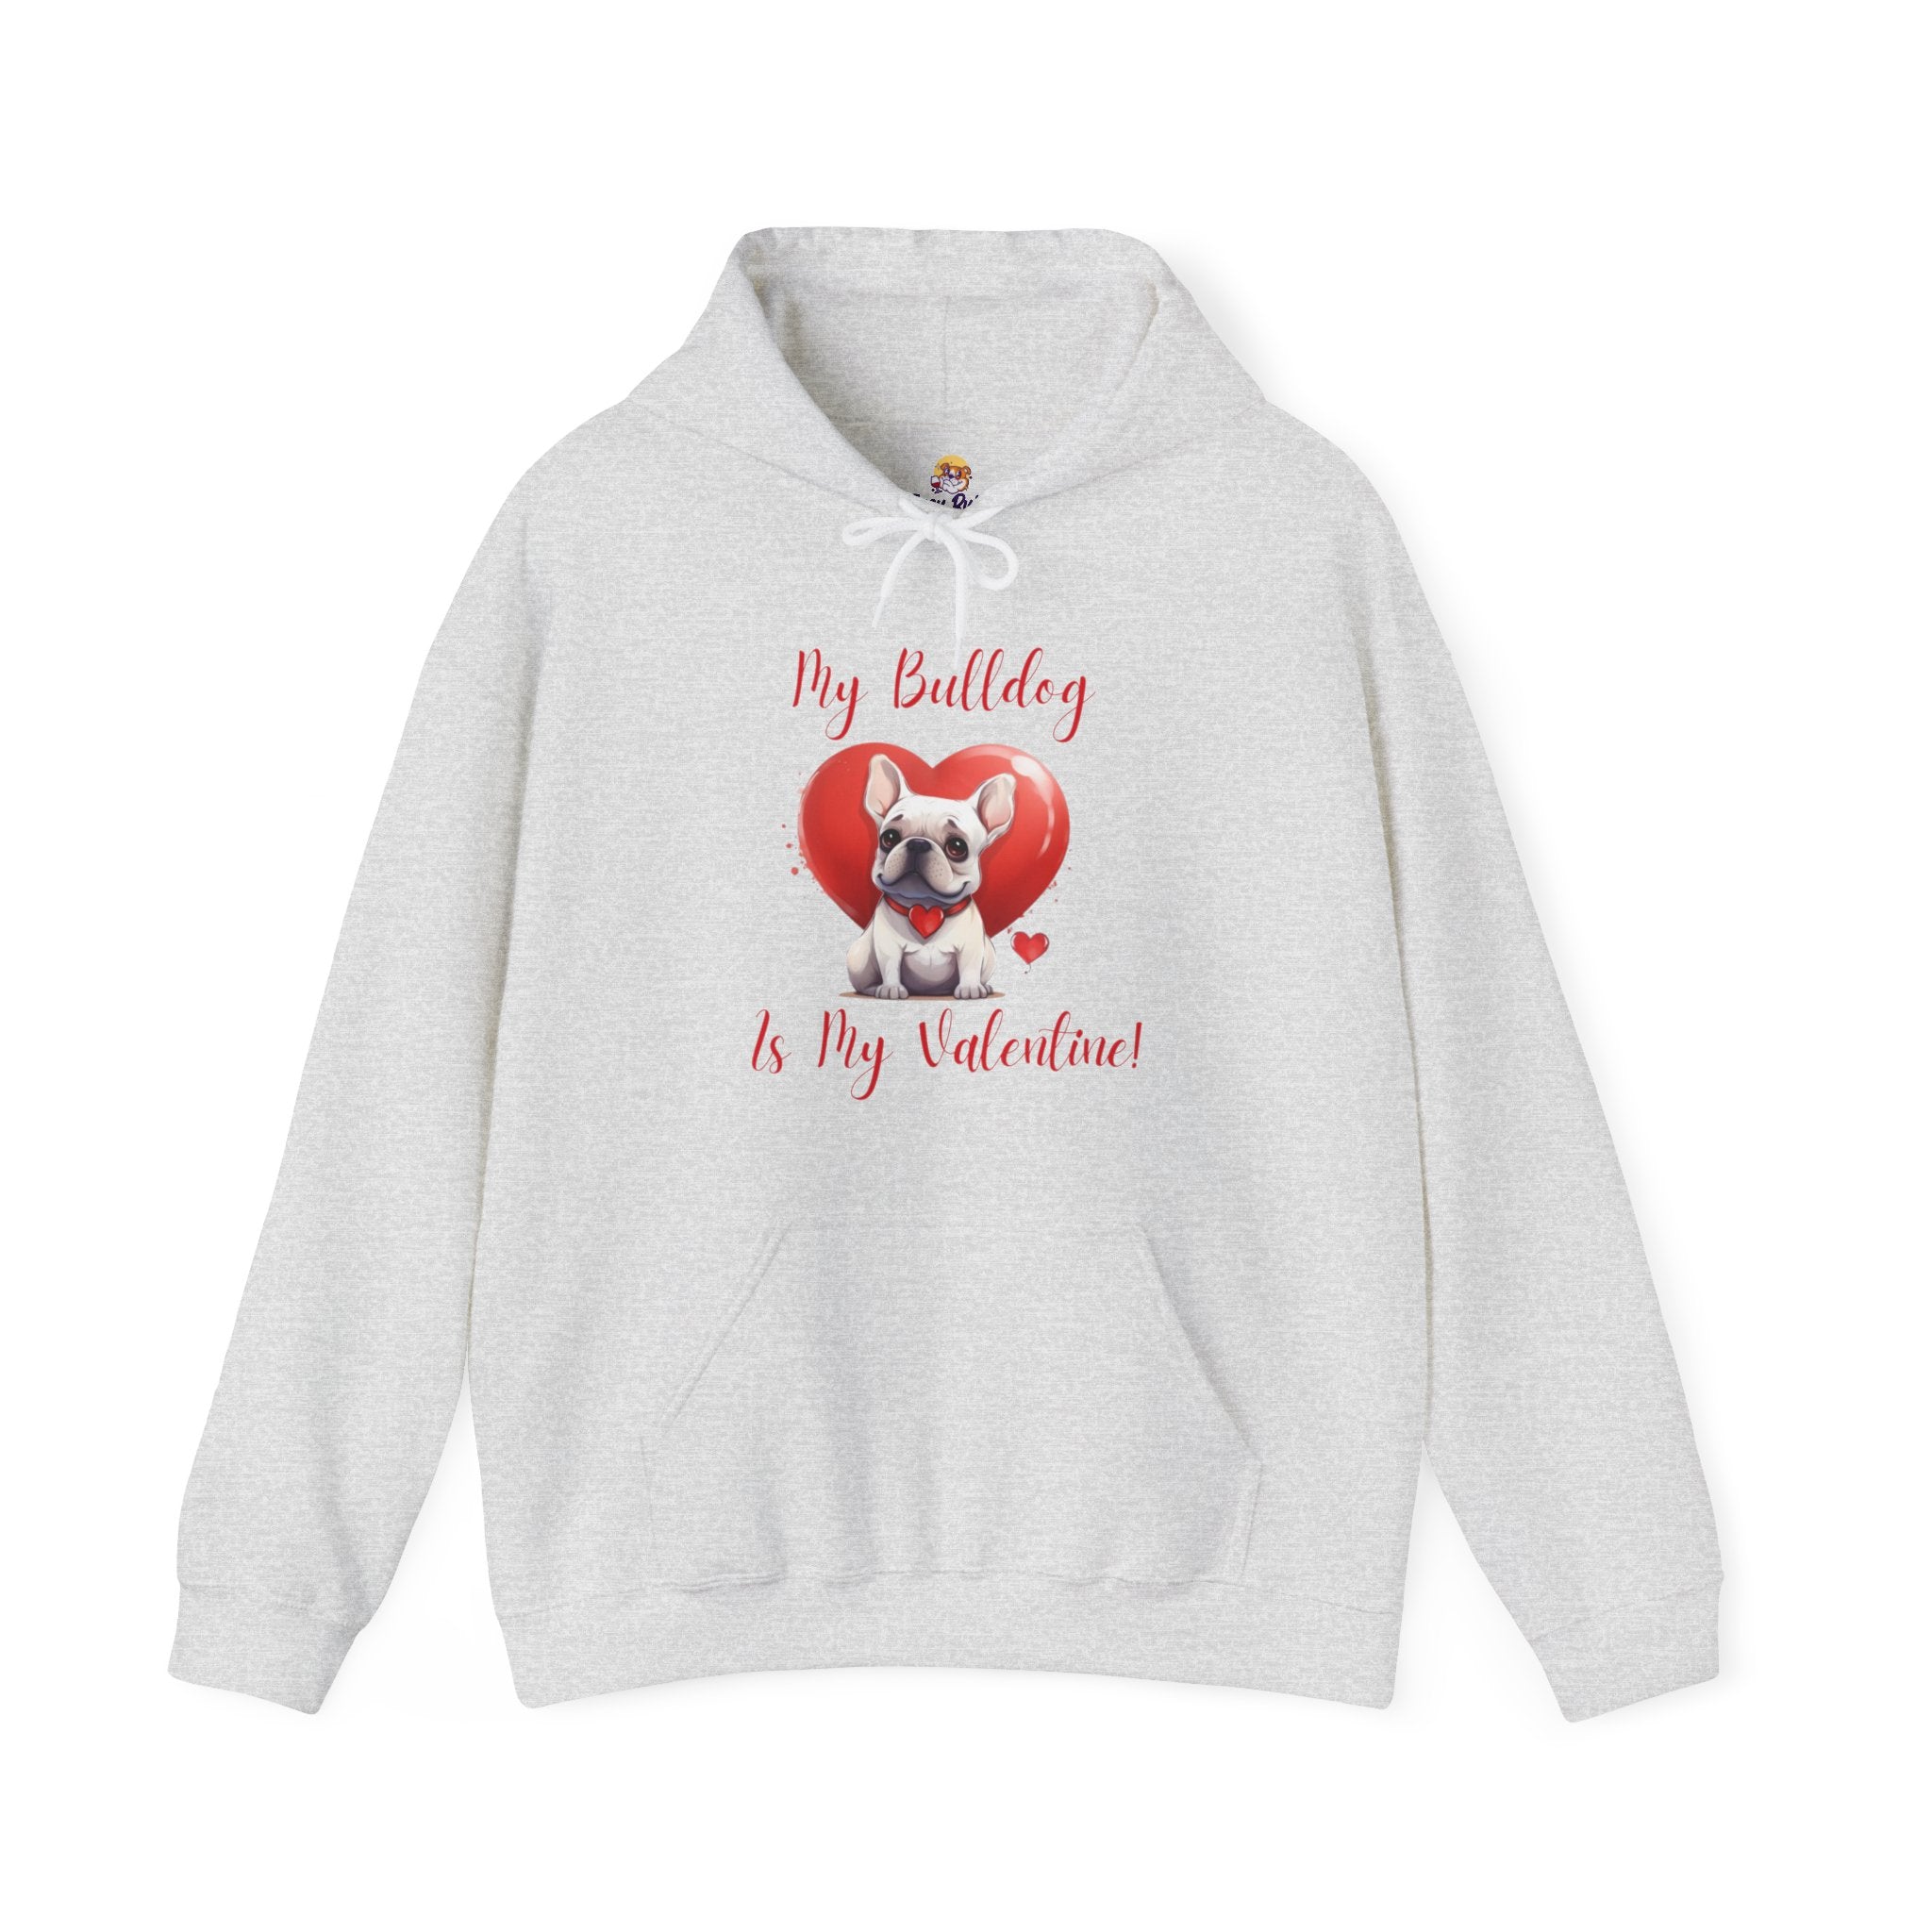 My Bulldog Is My Valentine" - Customizable Bulldog Valentine's Day Hoodie from Tipsy Bully (French/White)